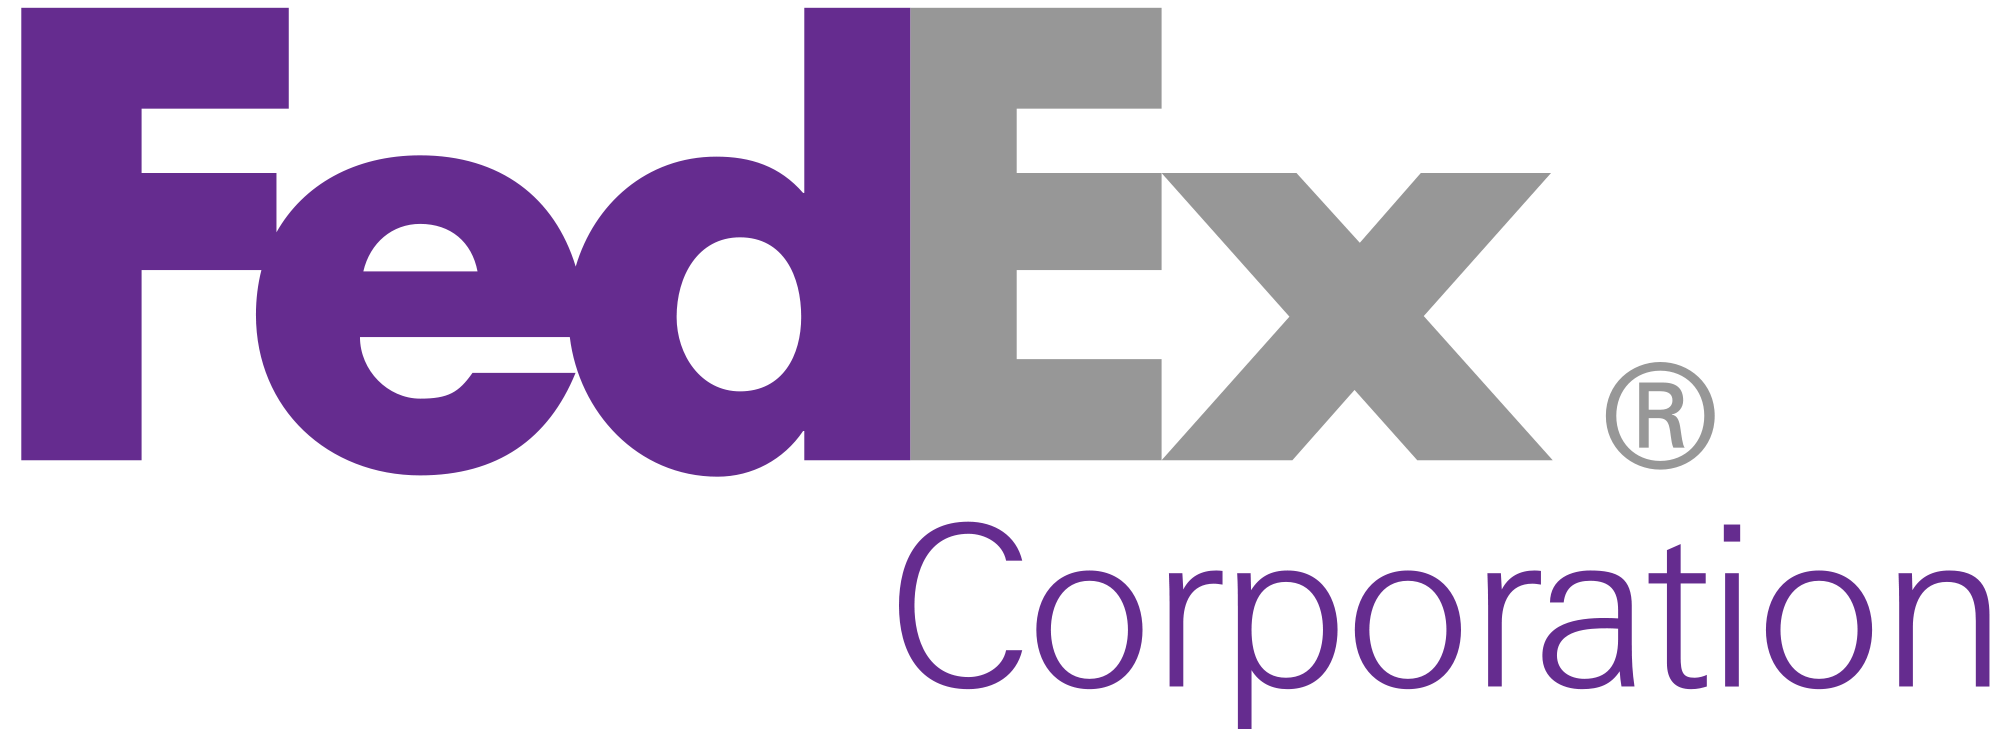 File:FedEx Corporation logo.png, Fedex Corporation PNG - Free PNG